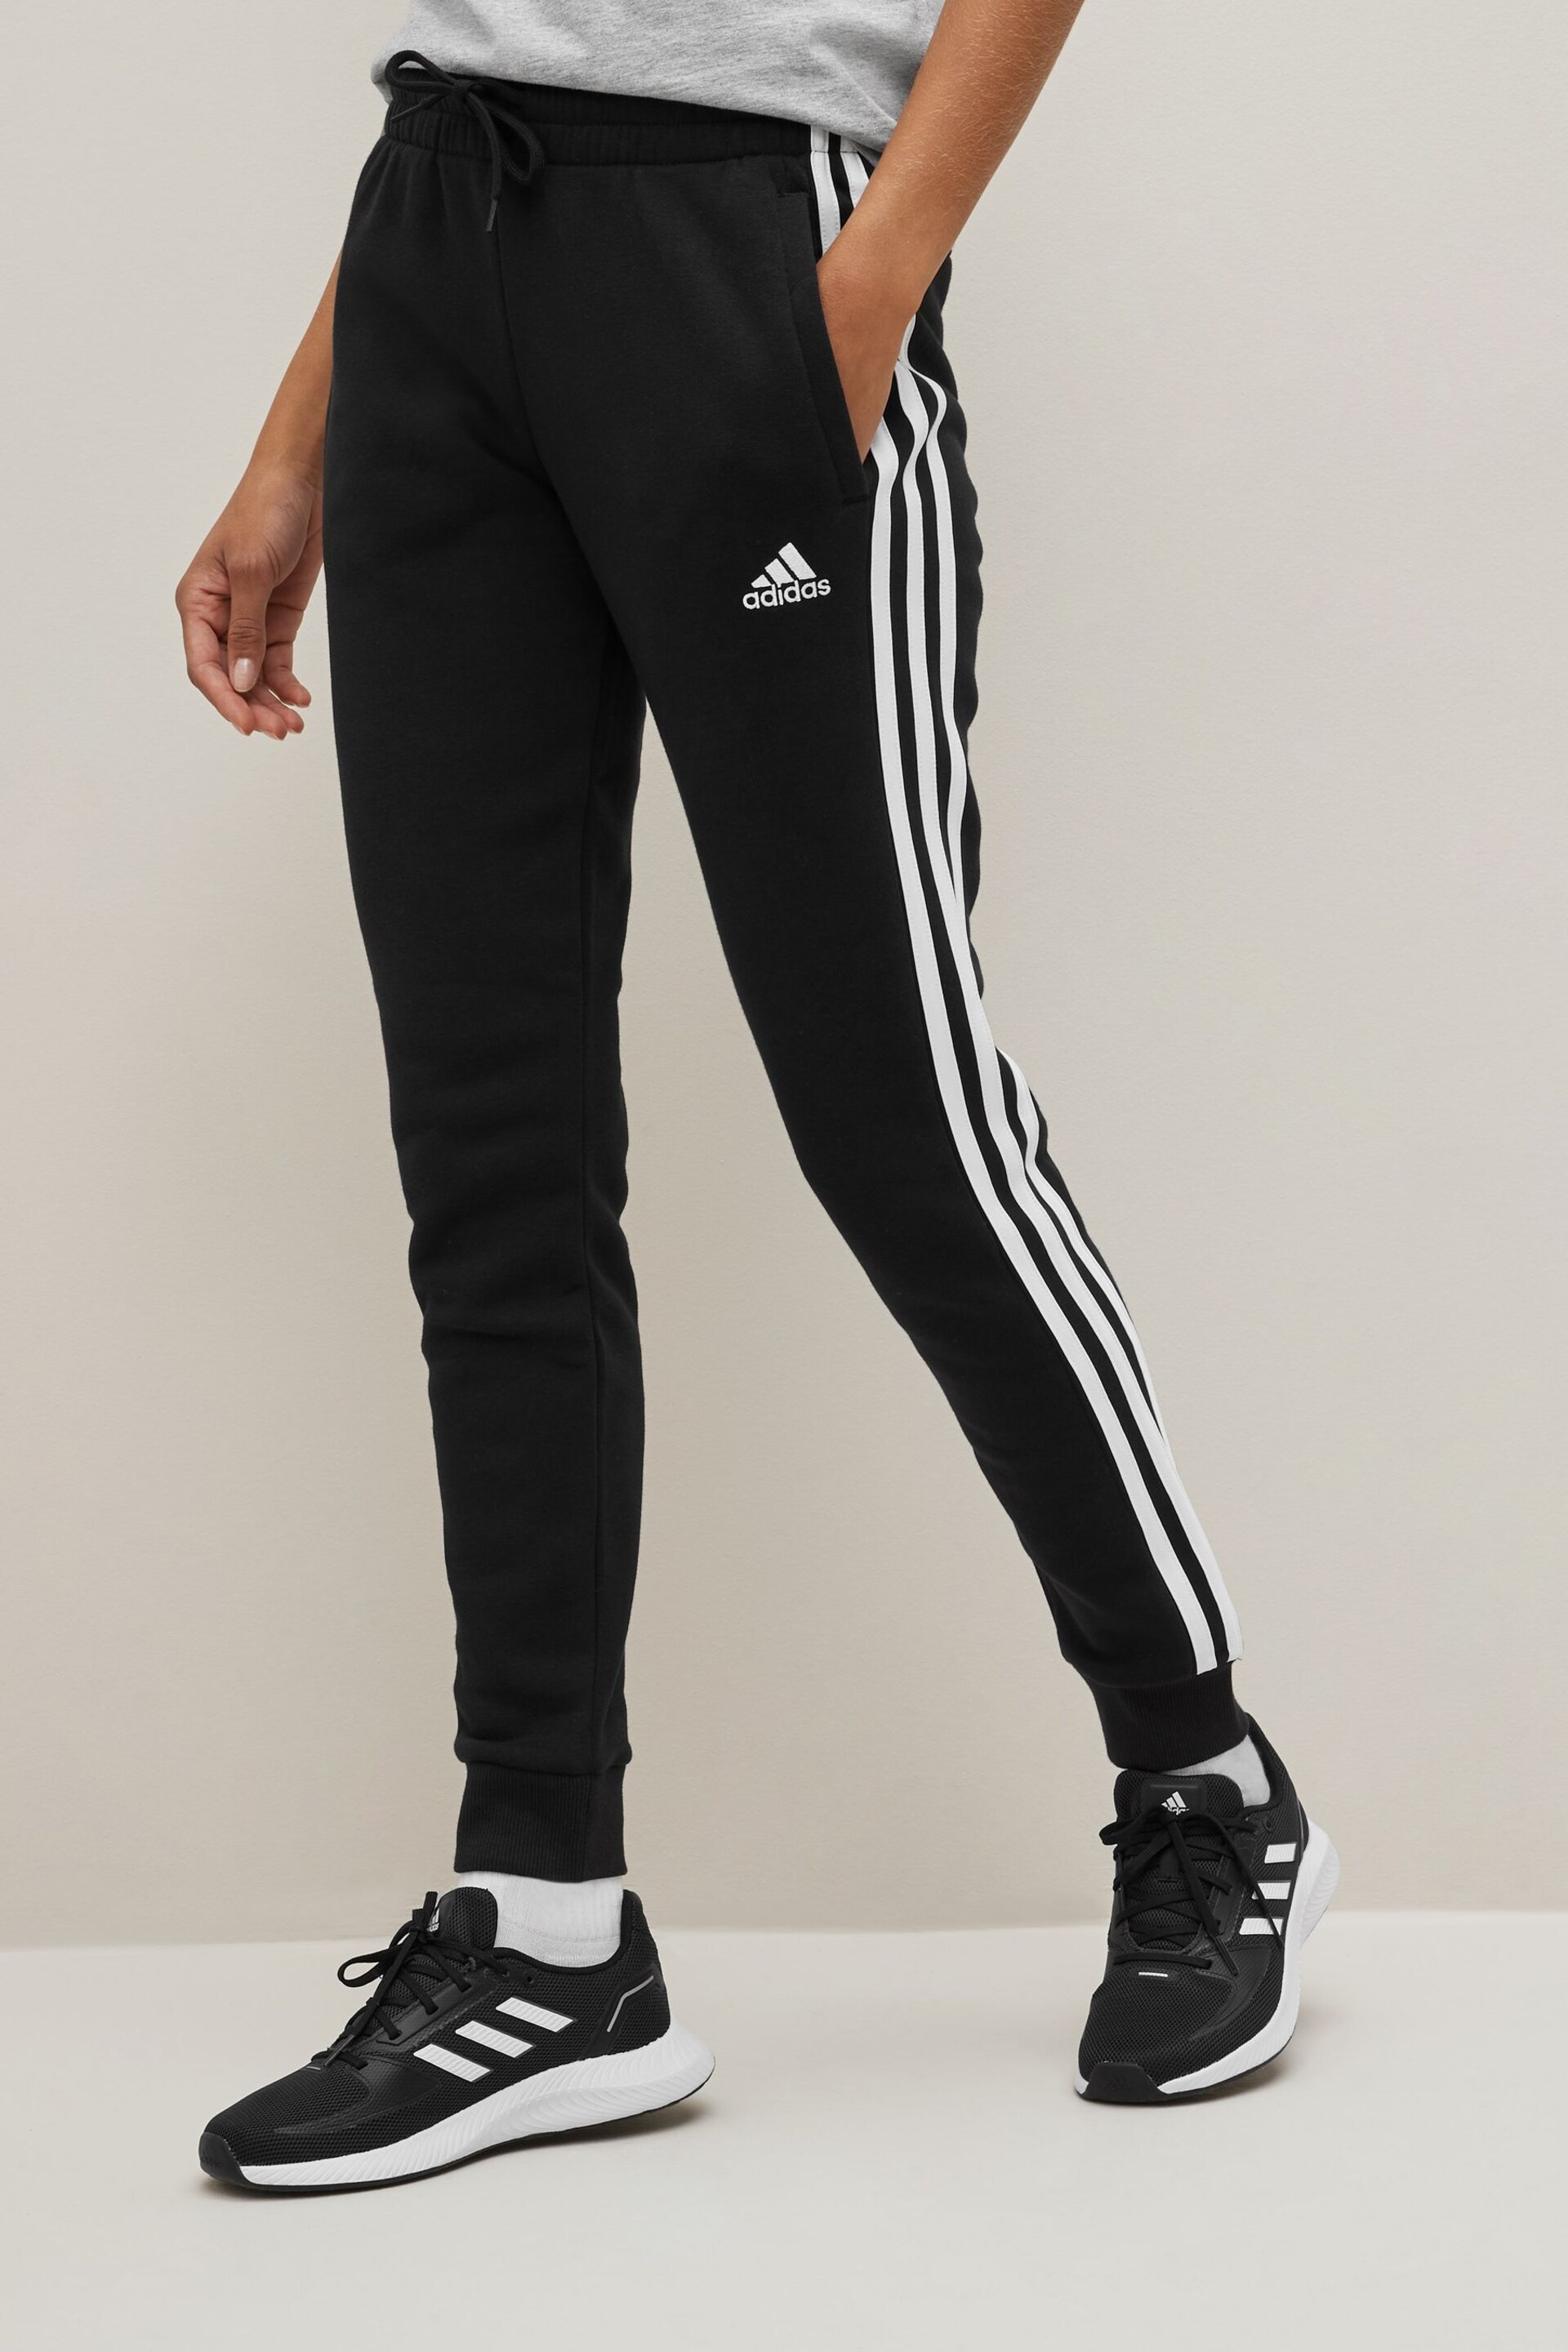 adidas Black Essentials 3 Stripe Fleece Joggers - Image 4 of 6